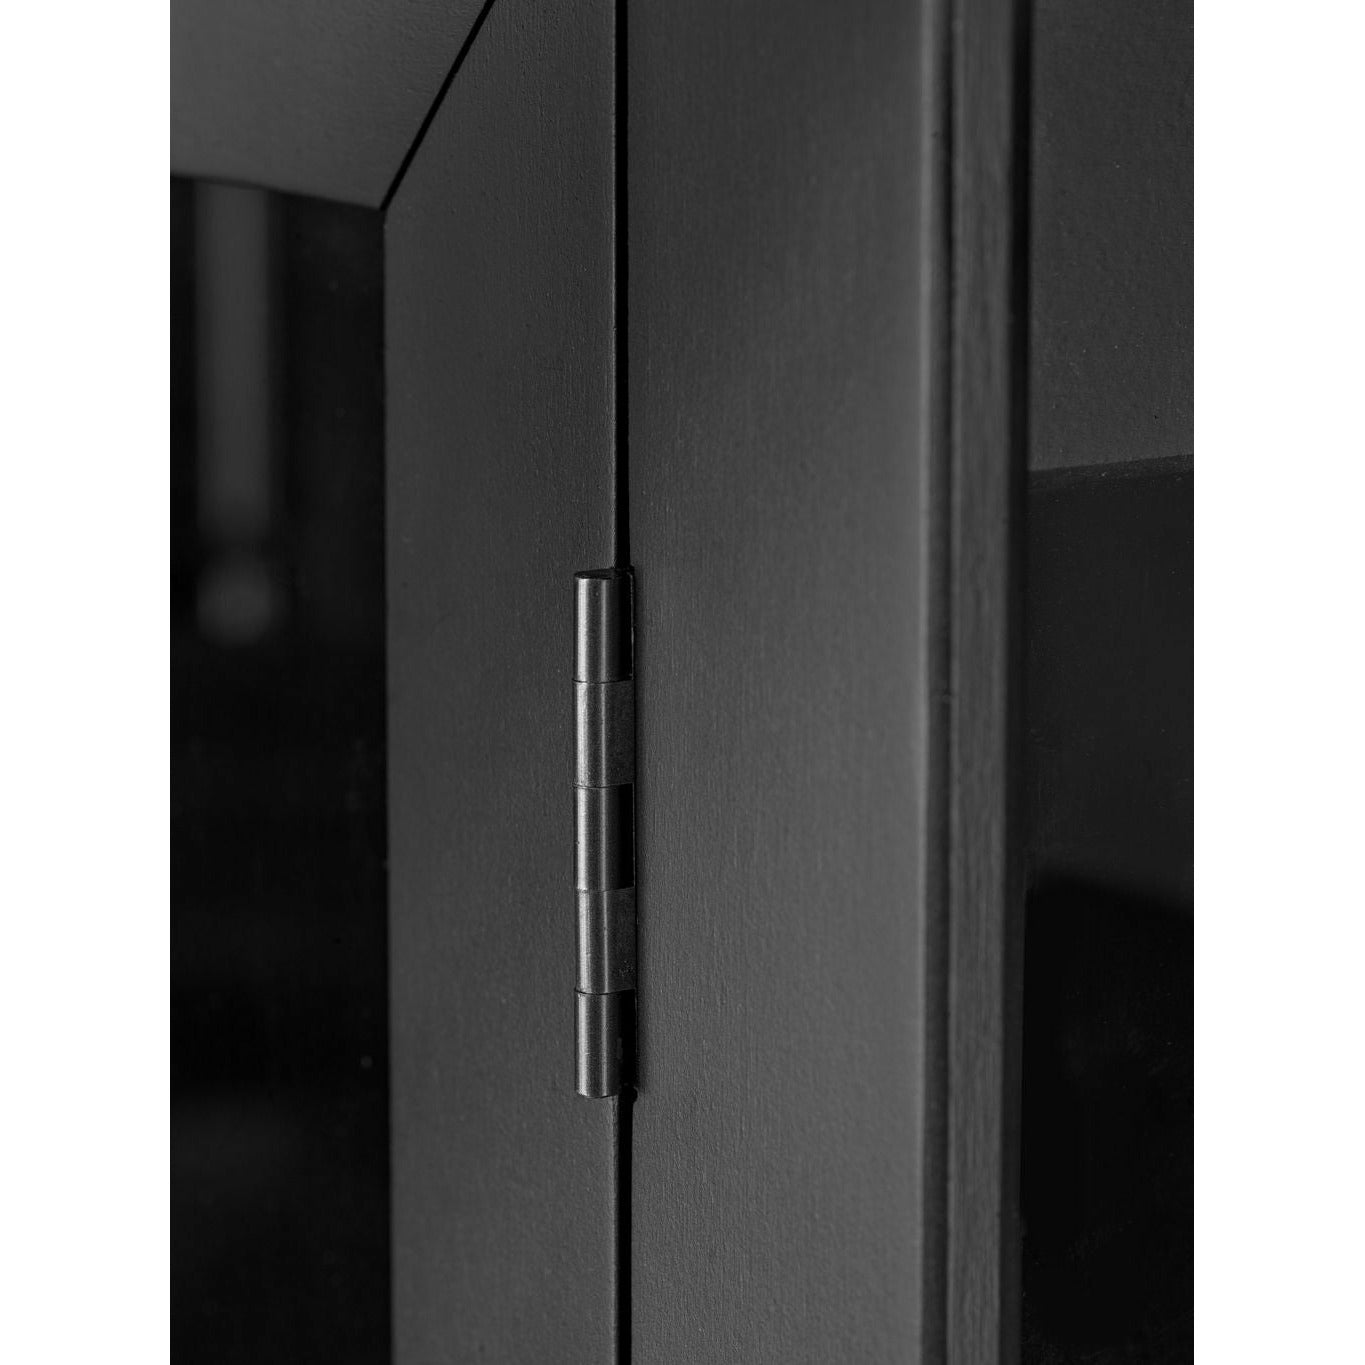 FDB Møbler A90 Boderne Display Szafka Beech Black Lancquered, H: 178 cm